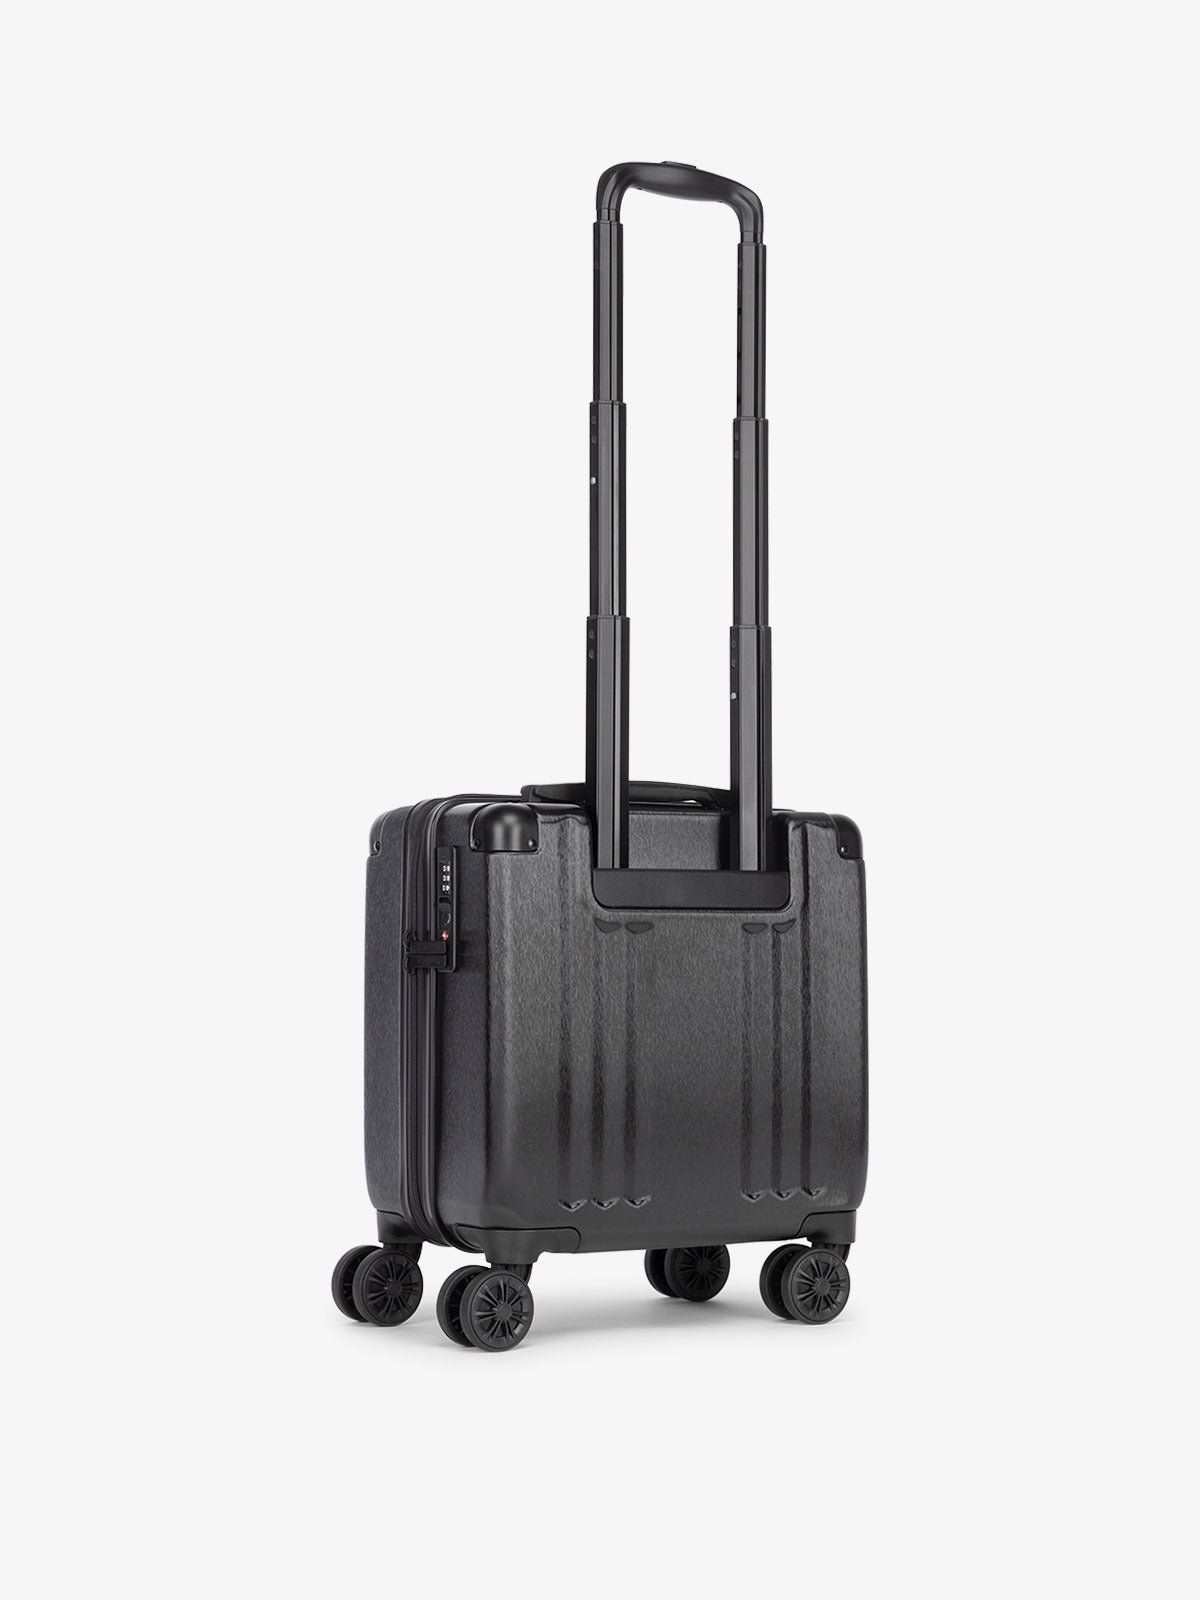 CALPAK Ambuer 16 inch wheeled carry on luggage with TSA lock in black